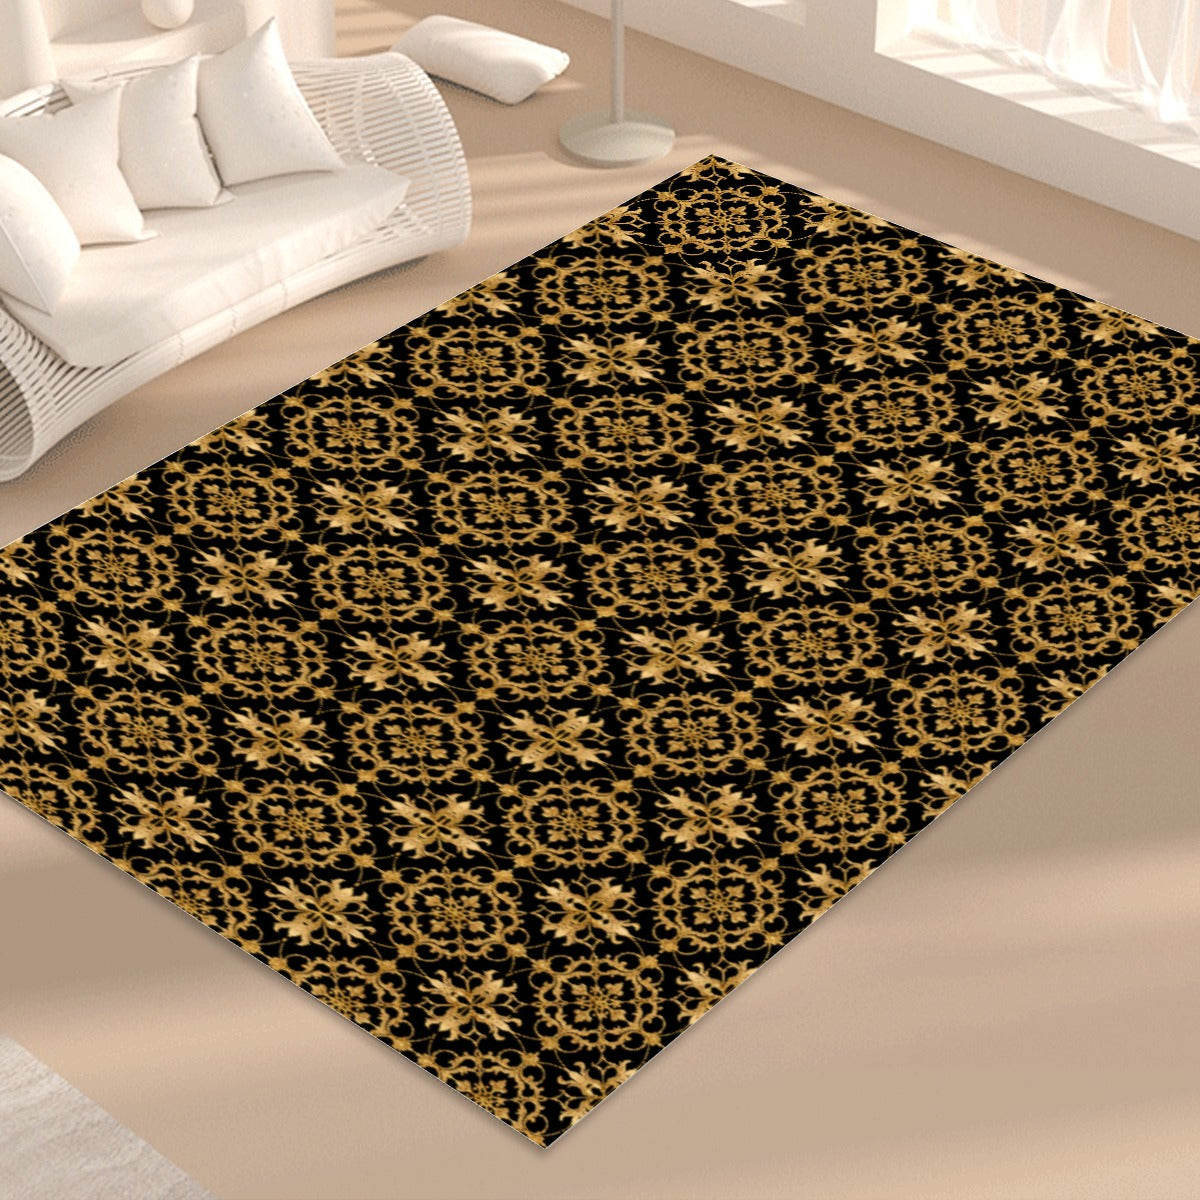 AC BAROQUE (Countess) Foldable Rectangular Floor Mat